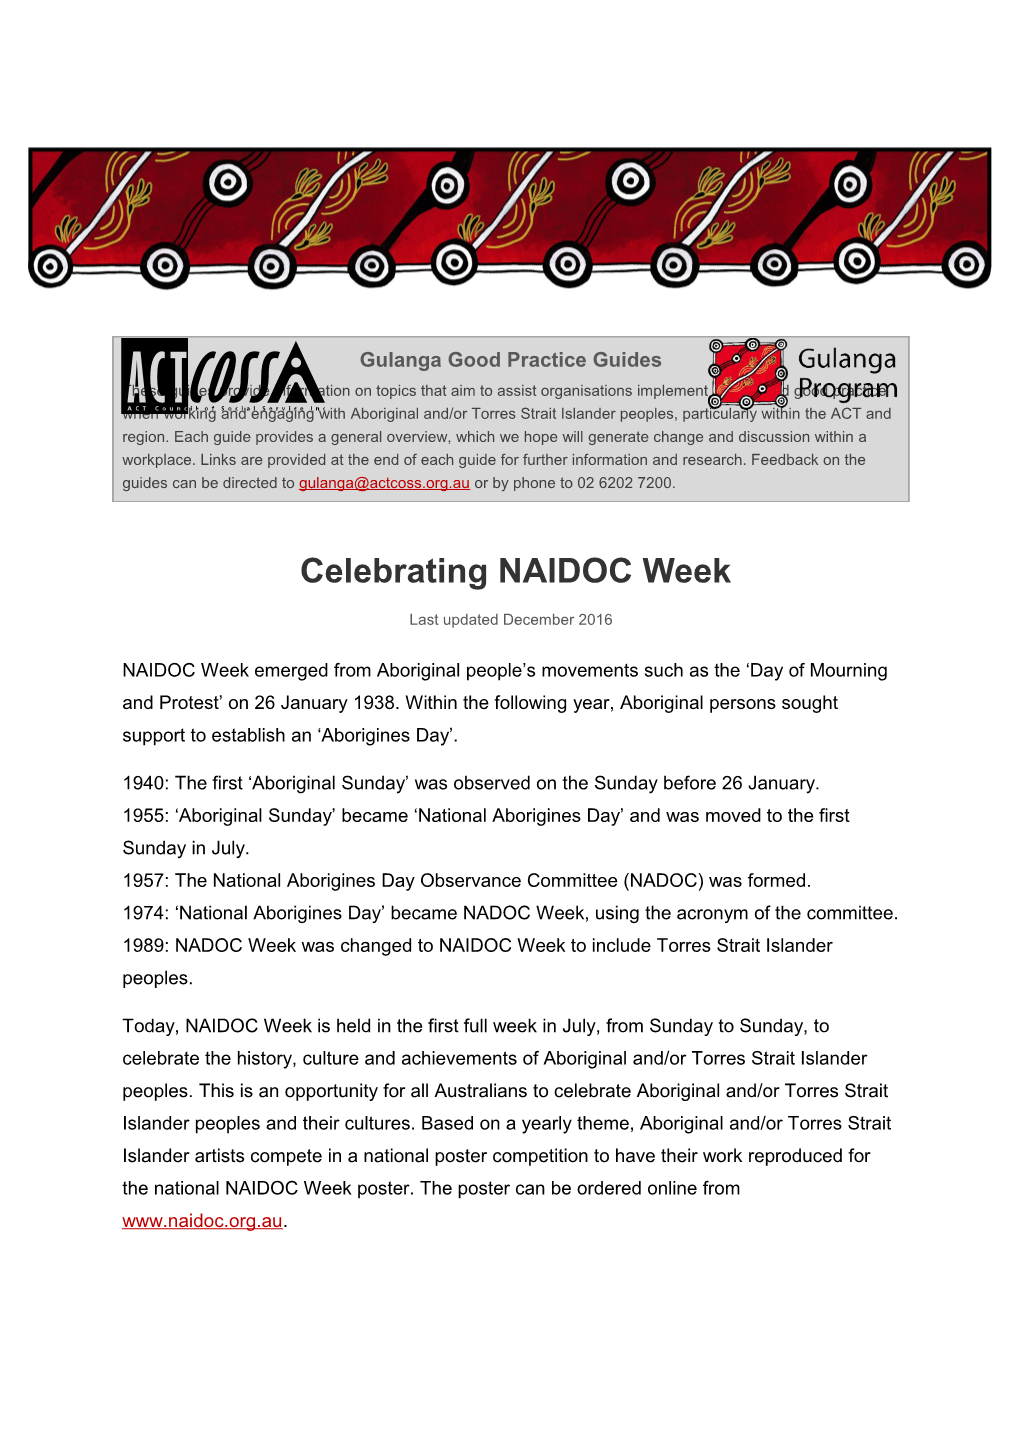 Celebrating NAIDOC Week